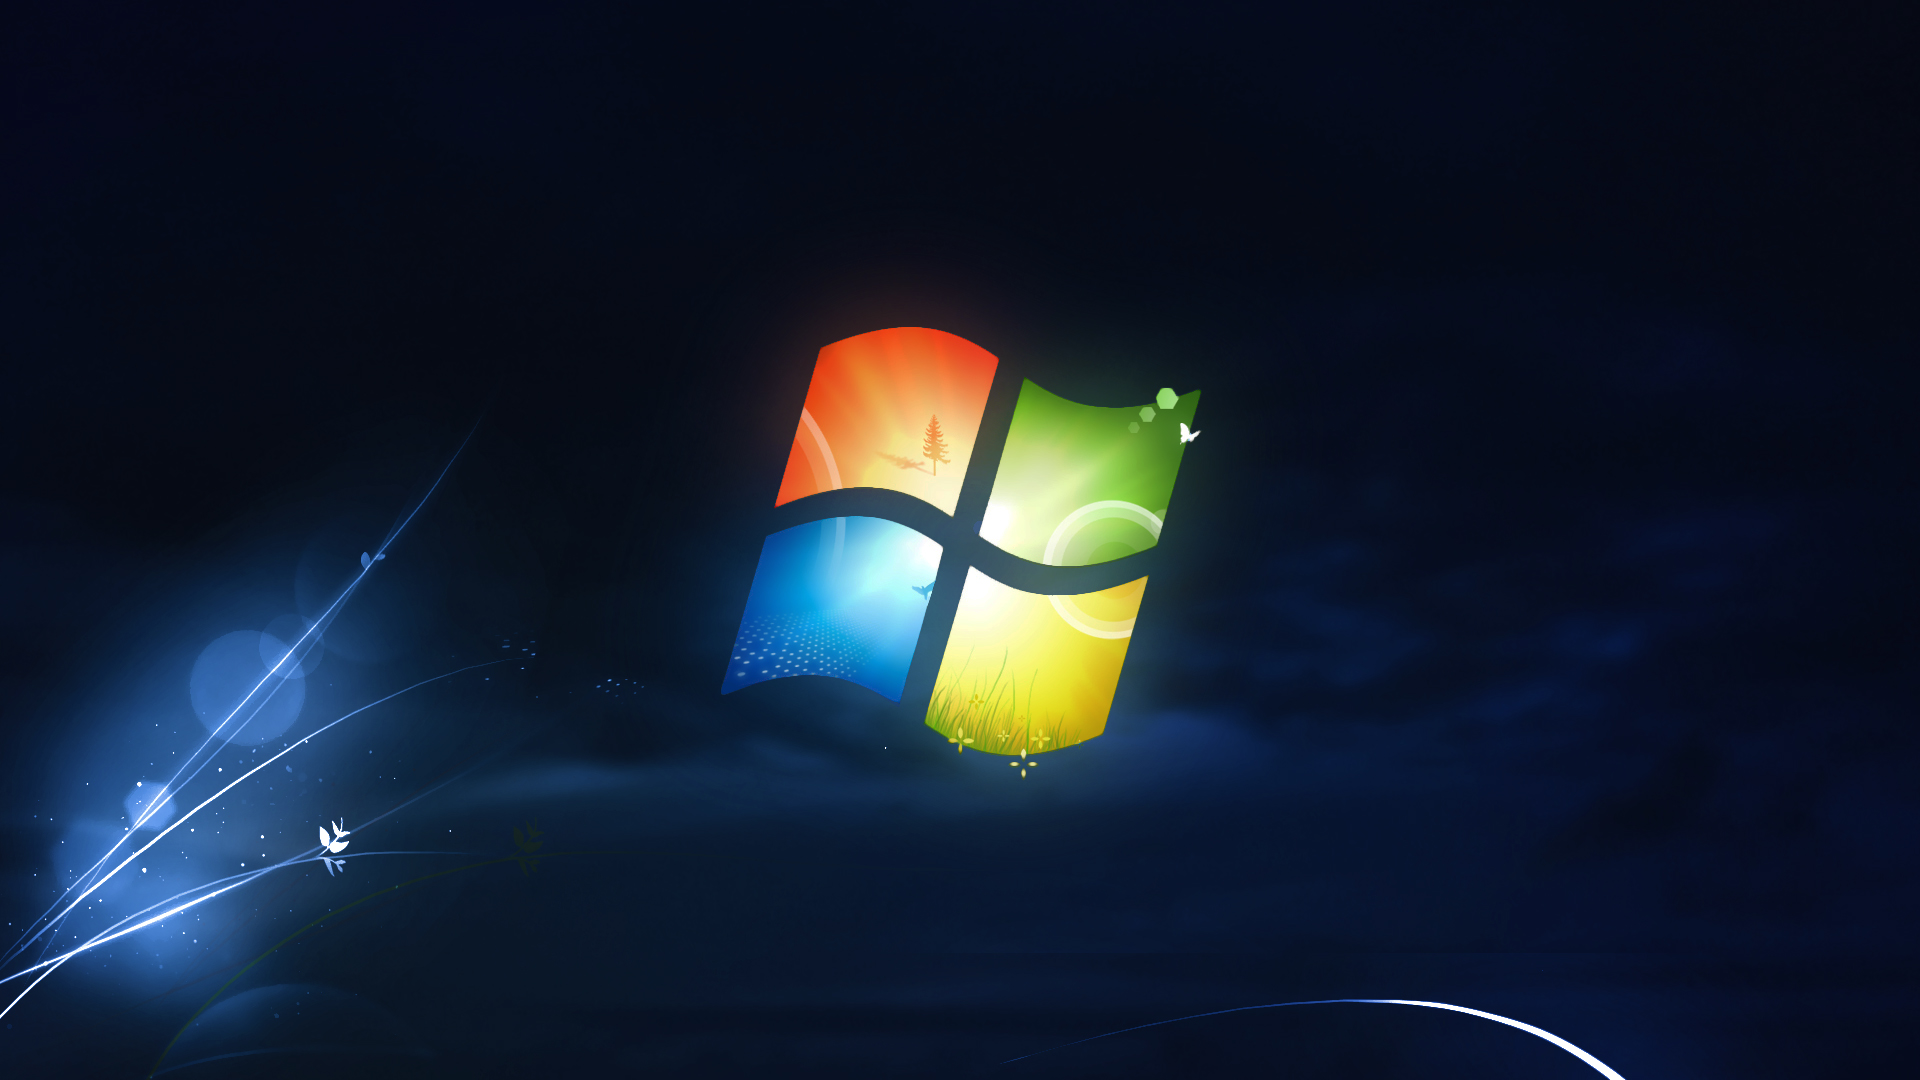 Microsoft Windows Wallpaper 1920x1080 Microsoft Windows Logos 1920x1080